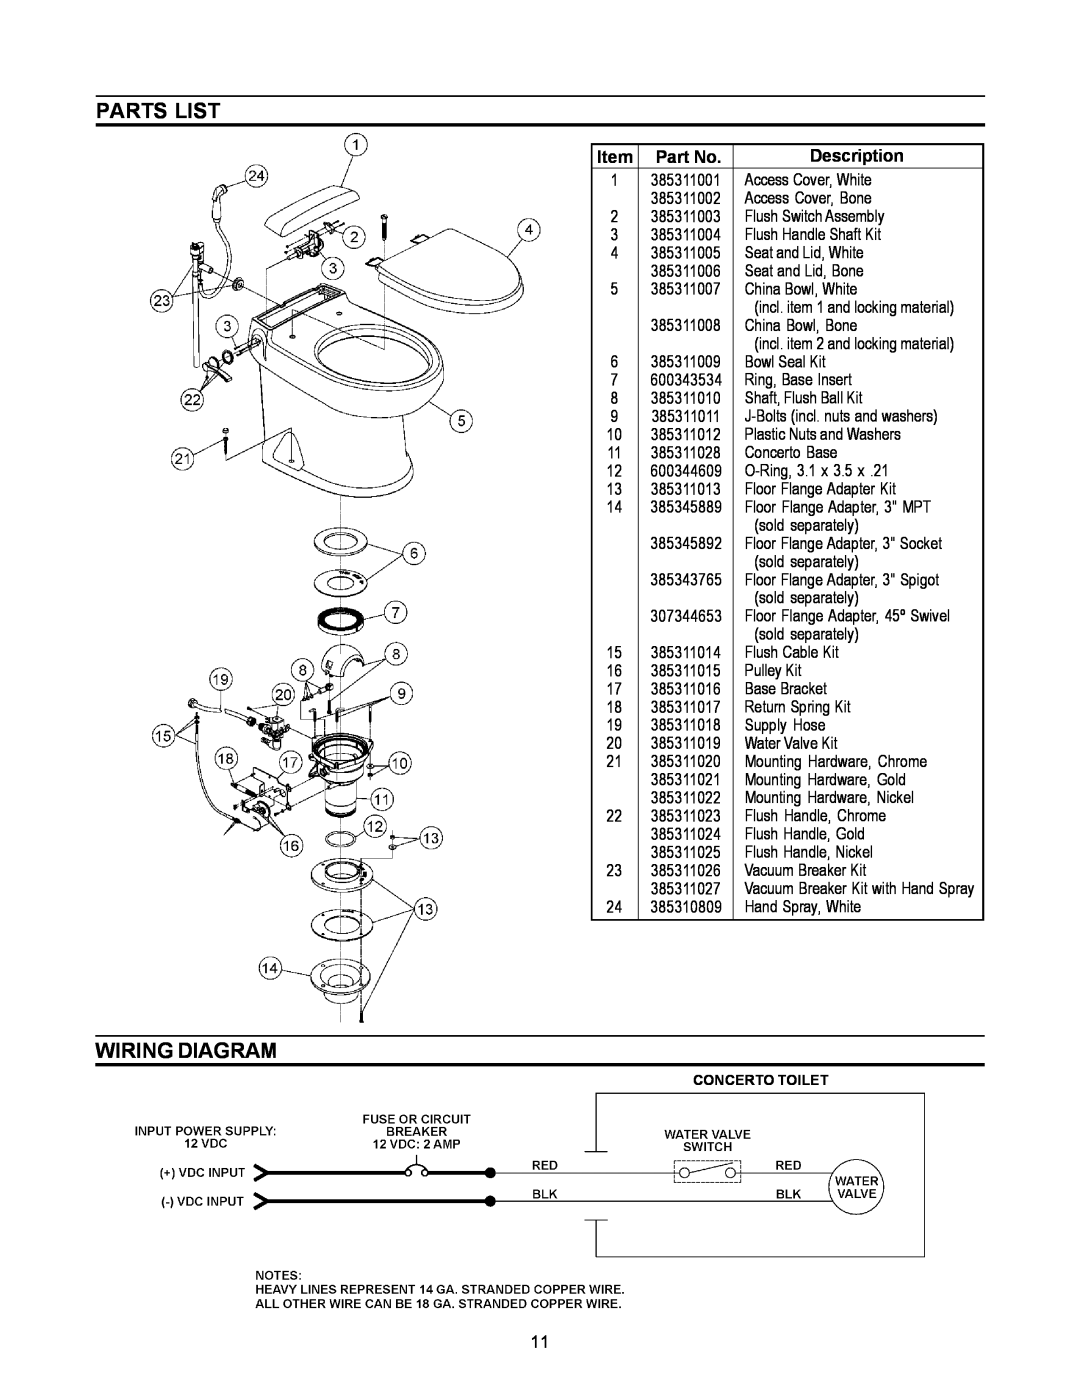 Dometic 3210 manual Parts List, Wiring Diagram, Description 